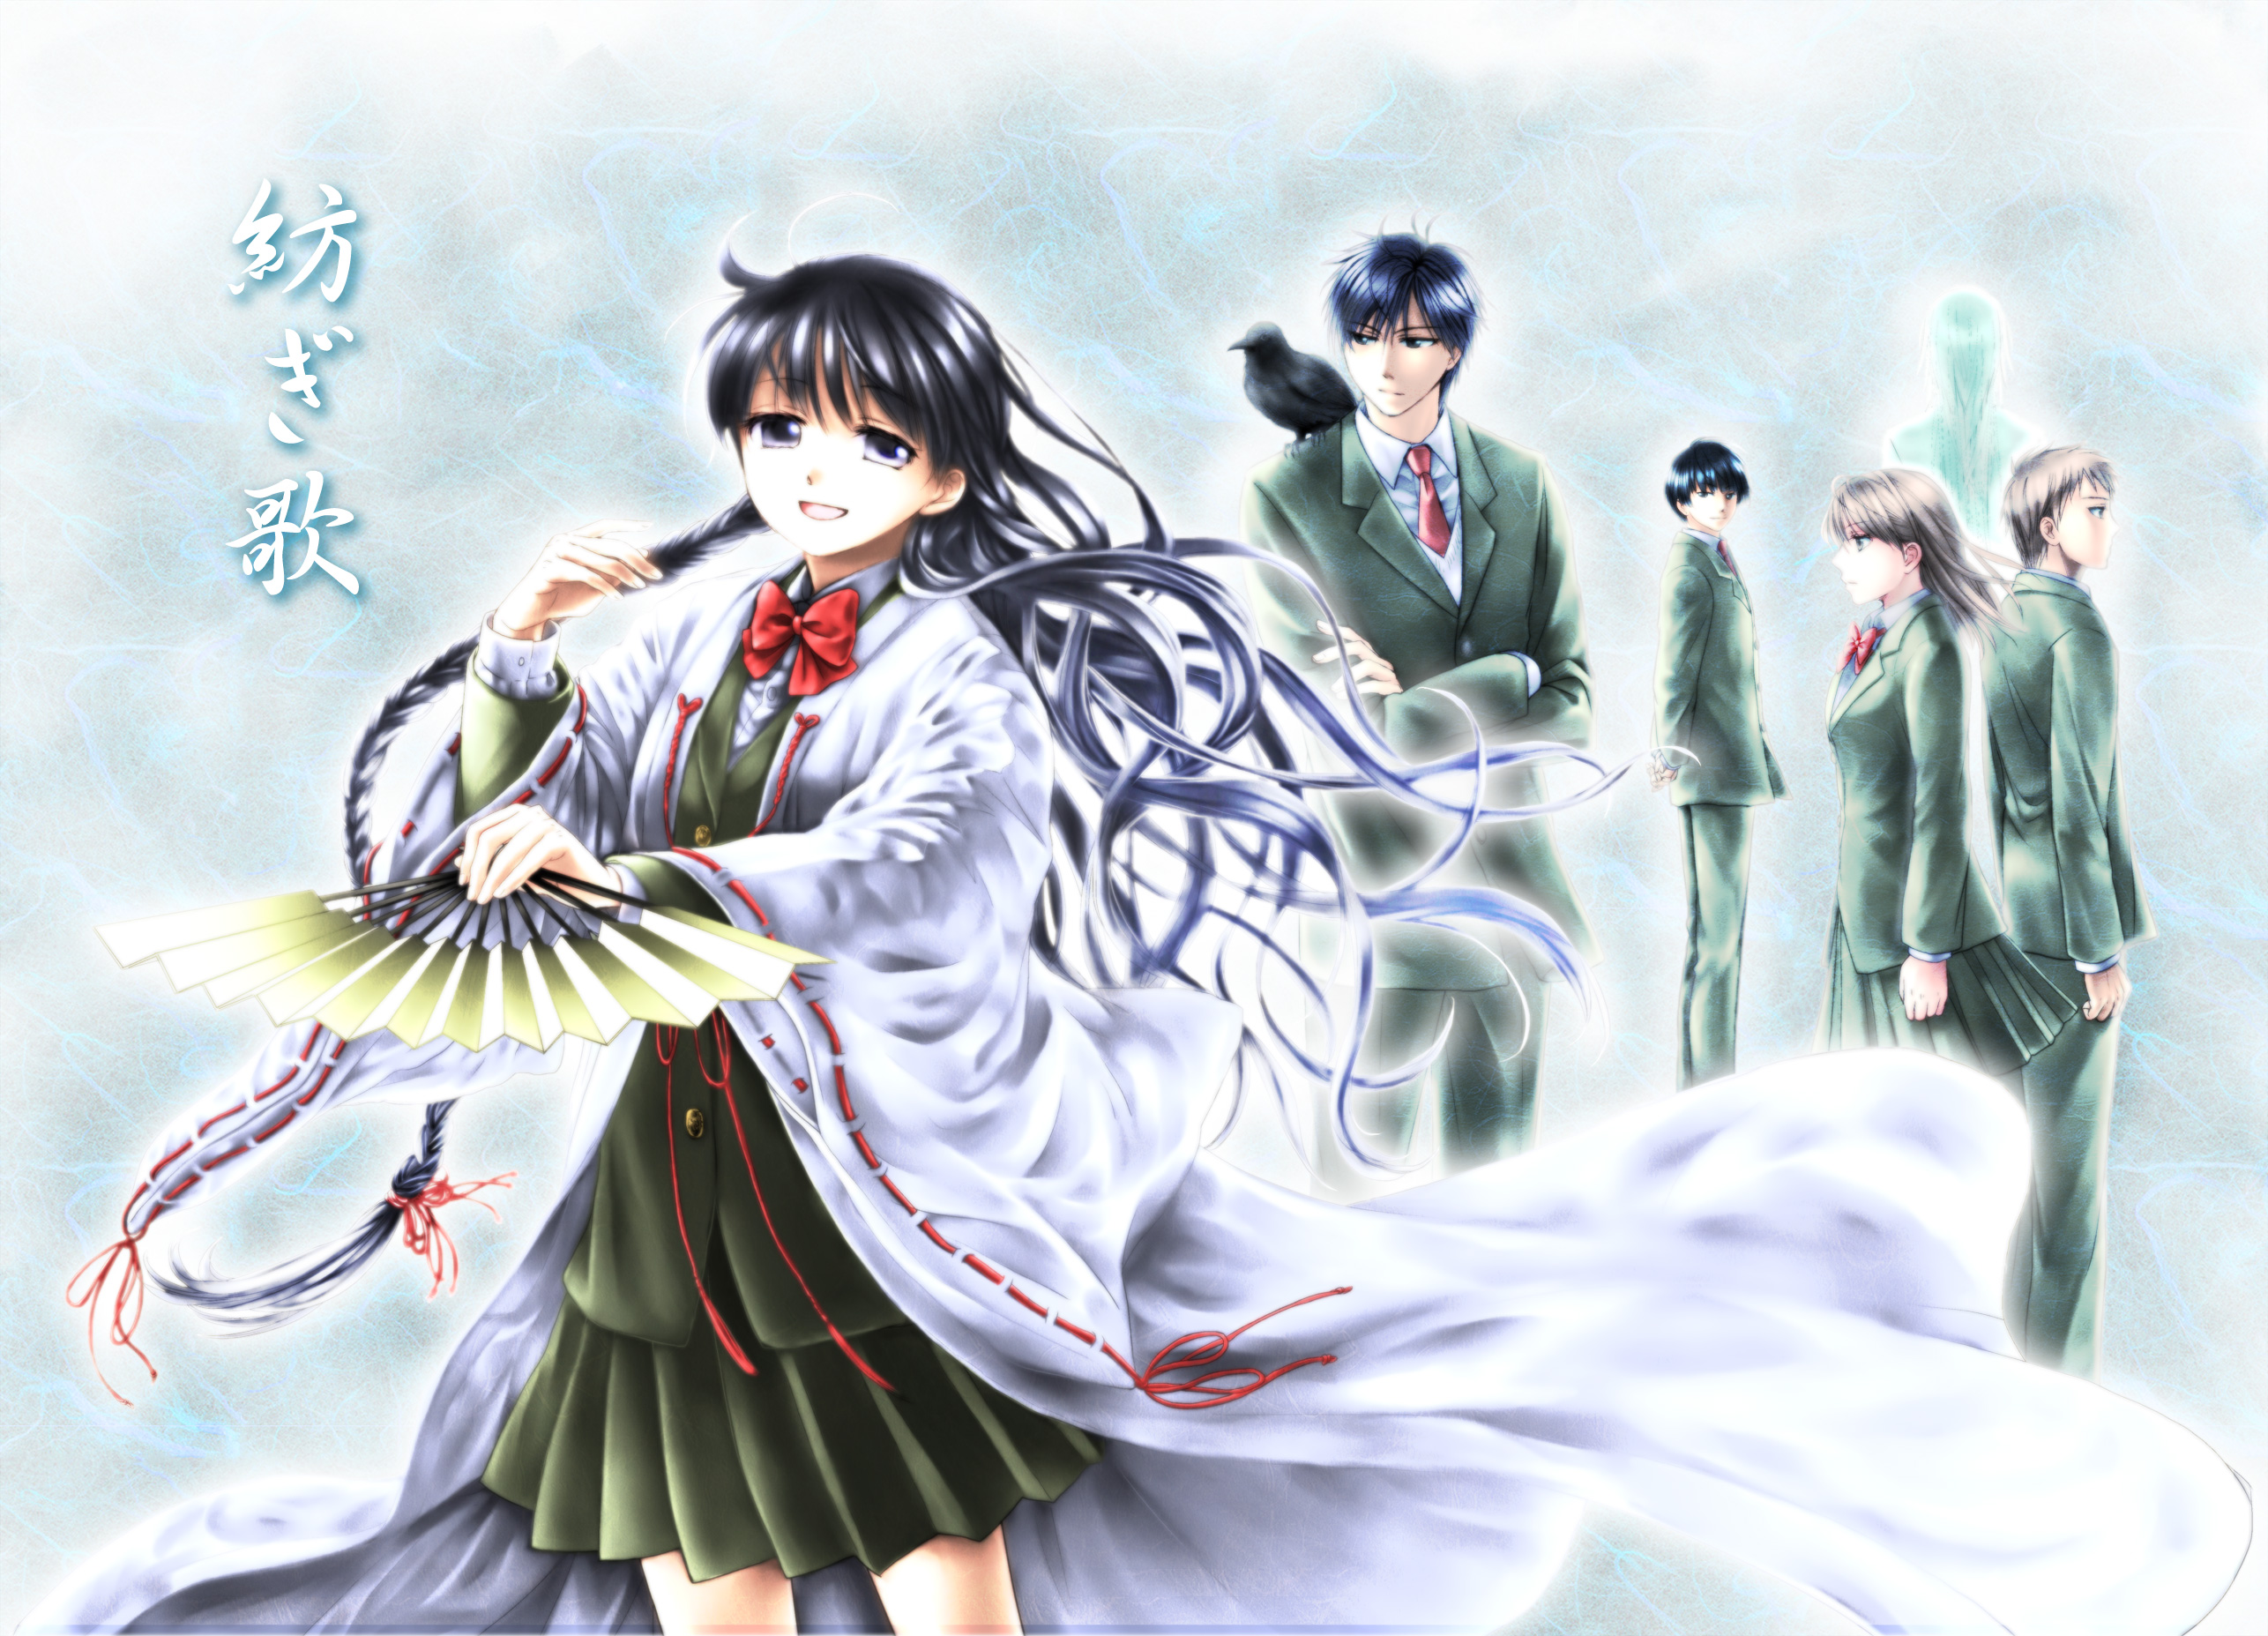 Anime Red Data Girl HD Wallpaper | Background Image